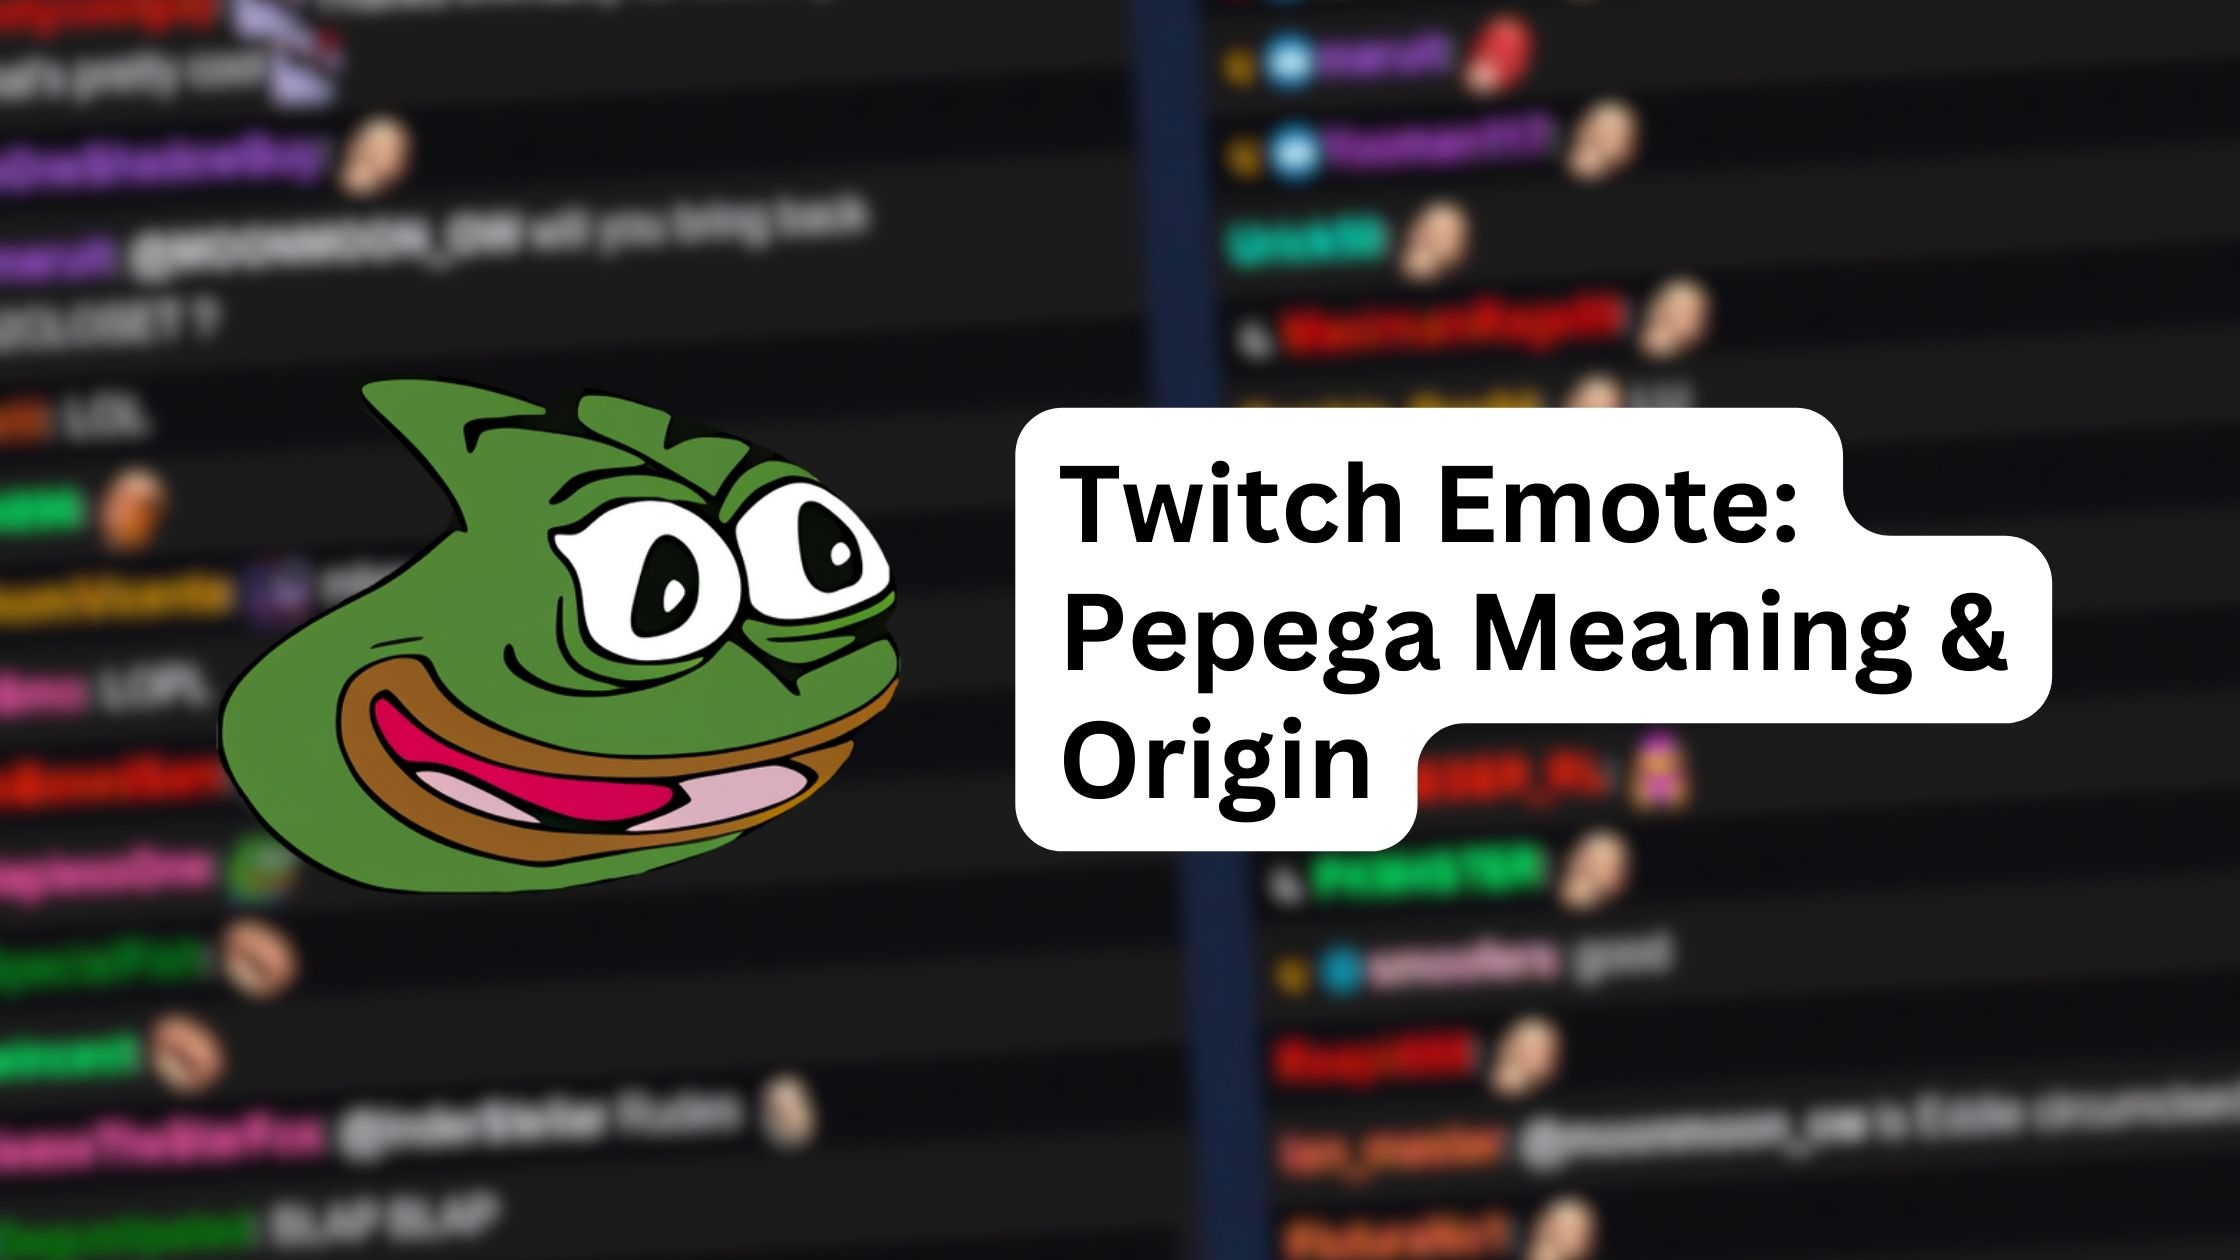 Pepega Meaning & Origin - Twitch Emote Explained